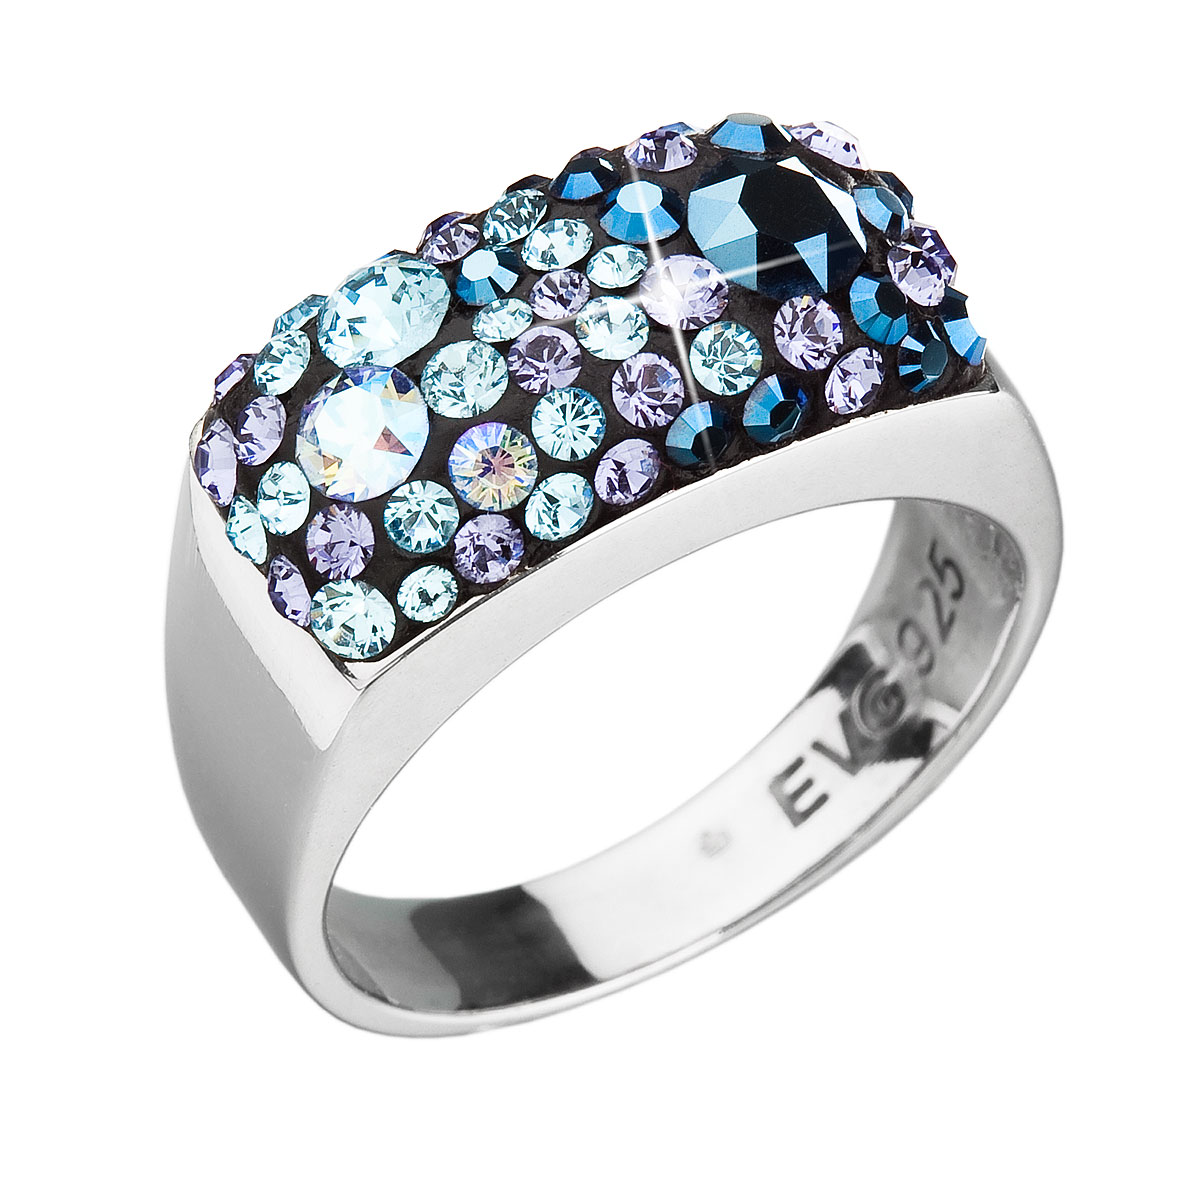 Evolution Group Stříbrný prsten s krystaly Swarovski modrý 35014.3 blue style